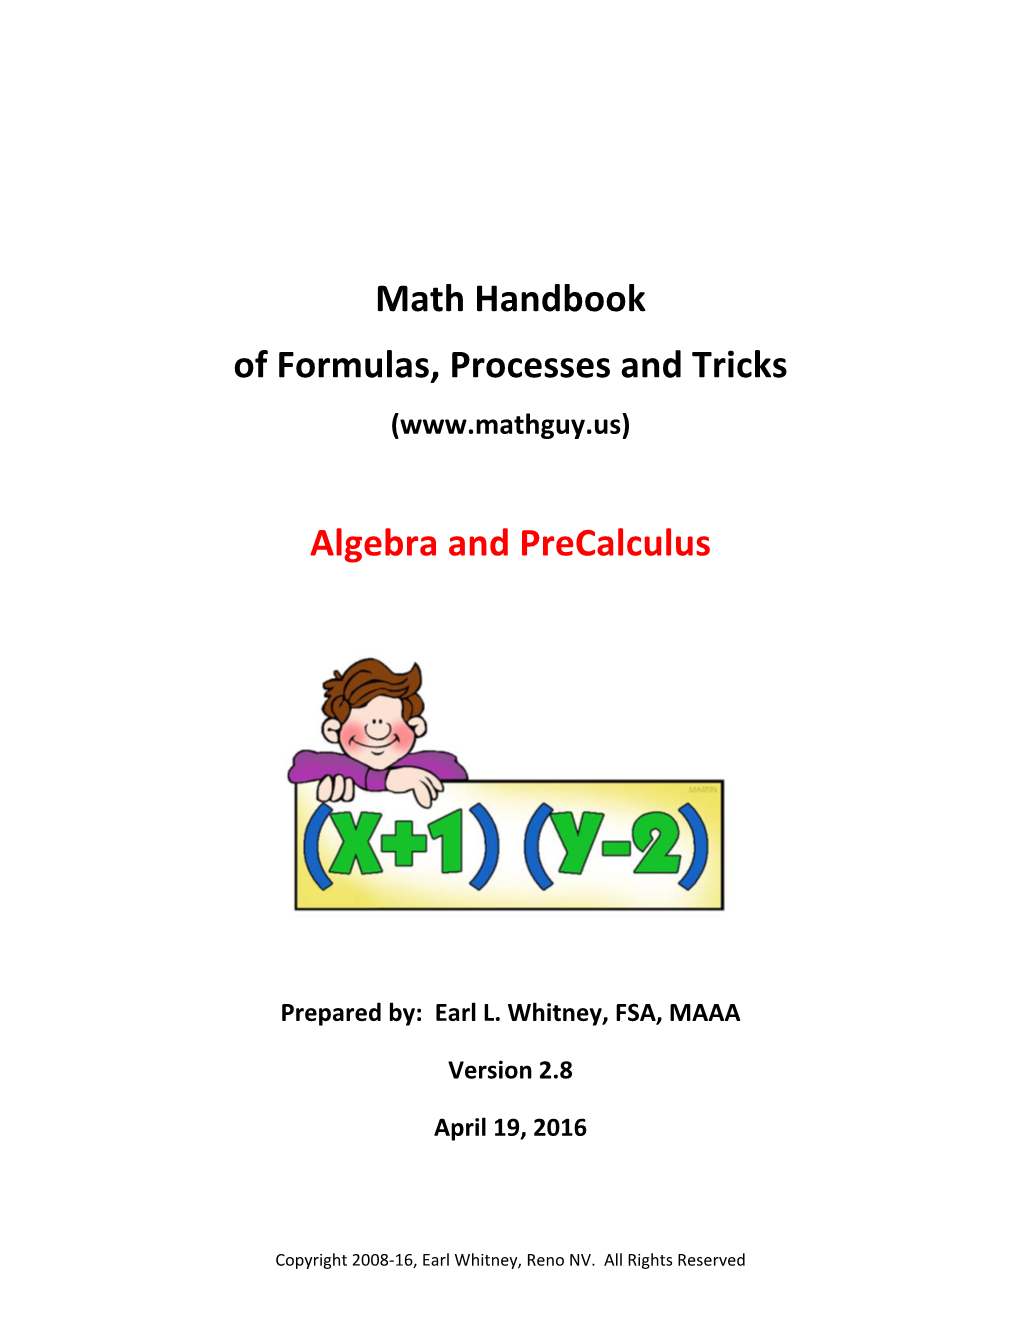 Math Handbook of Formulas, Processes and Tricks Algebra And